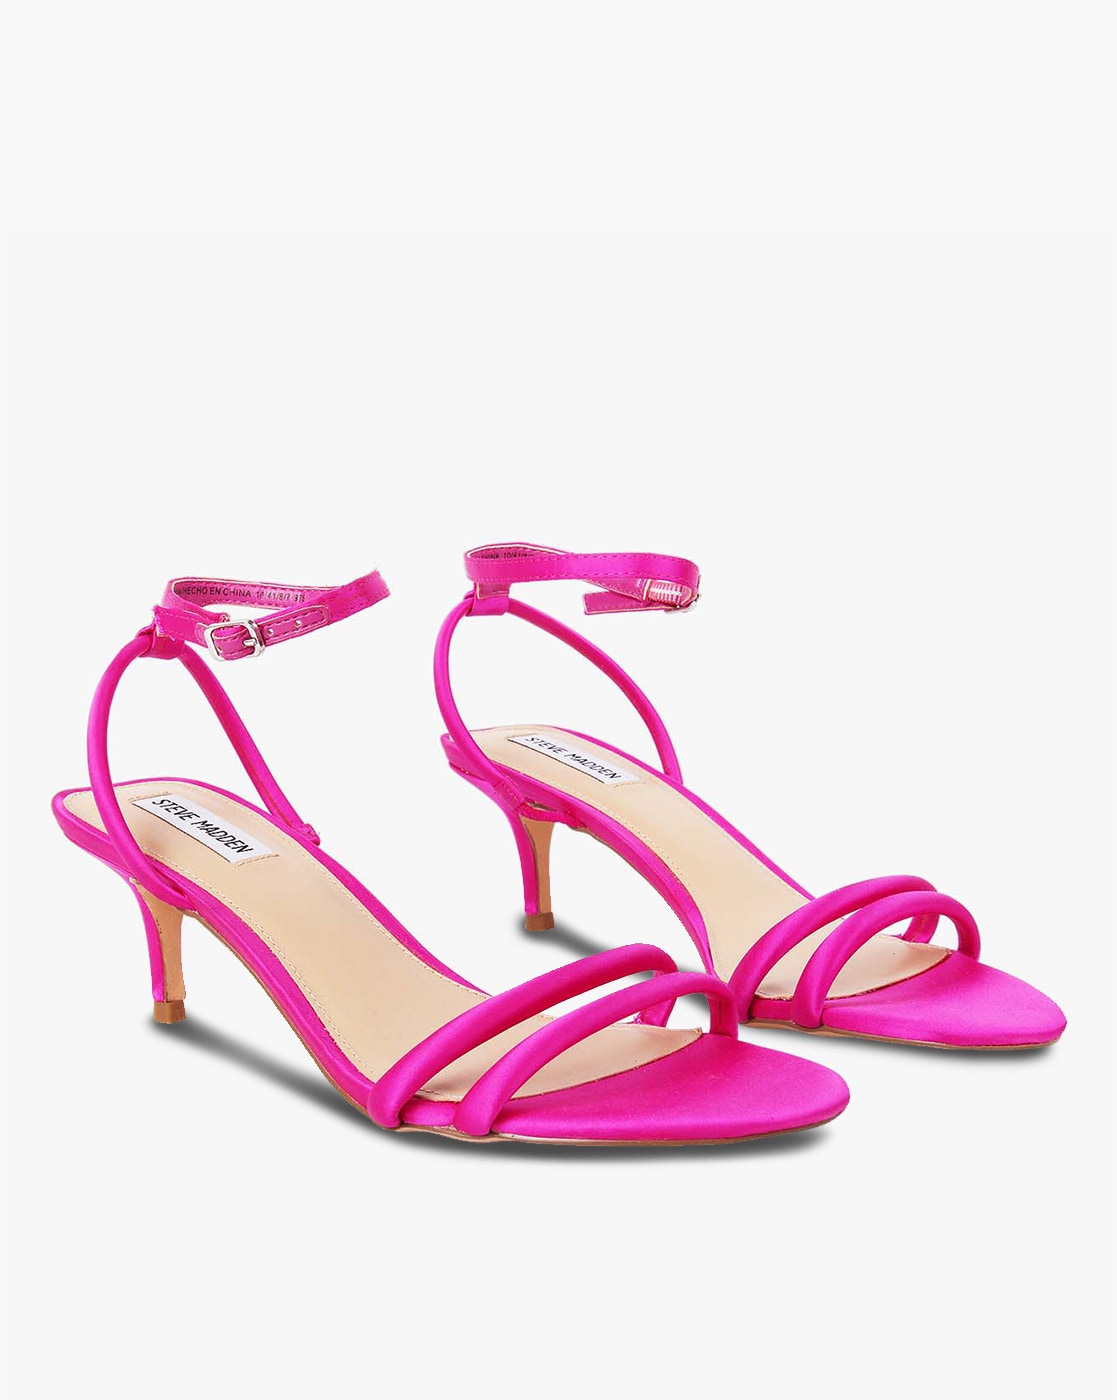 Buy Fuschia Pink Heeled Sandals for 